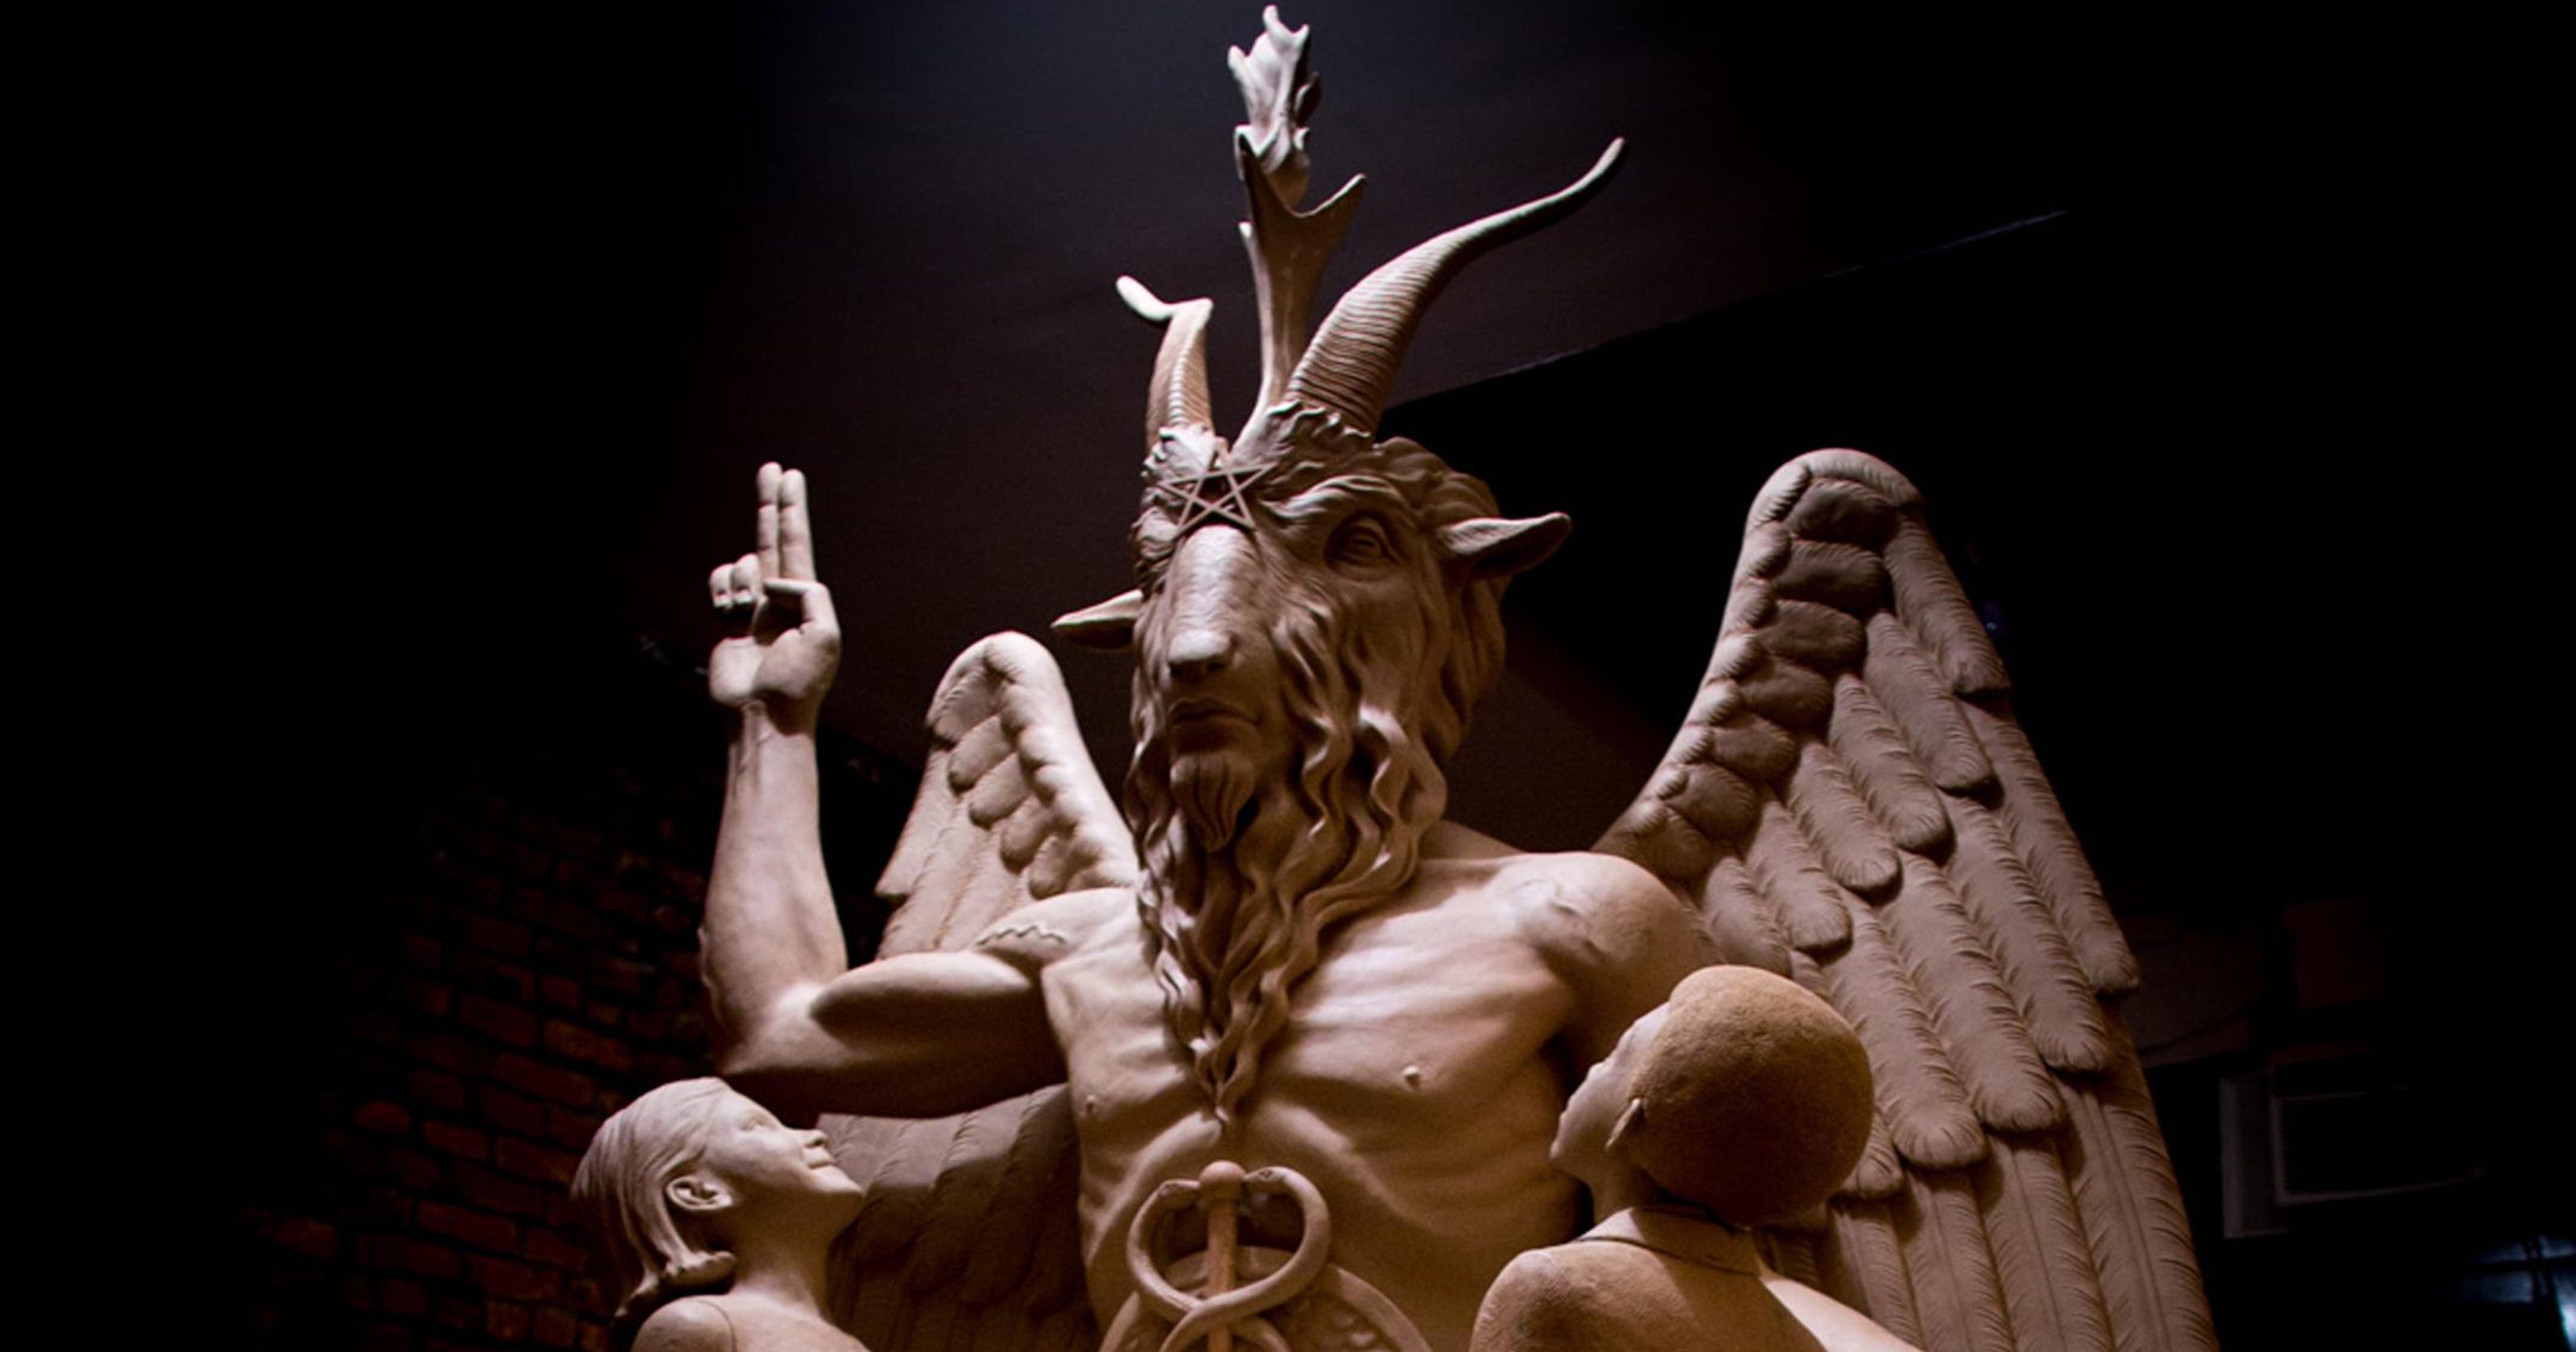 Satanic Statue In Detroit Michigan Lukekellydesign